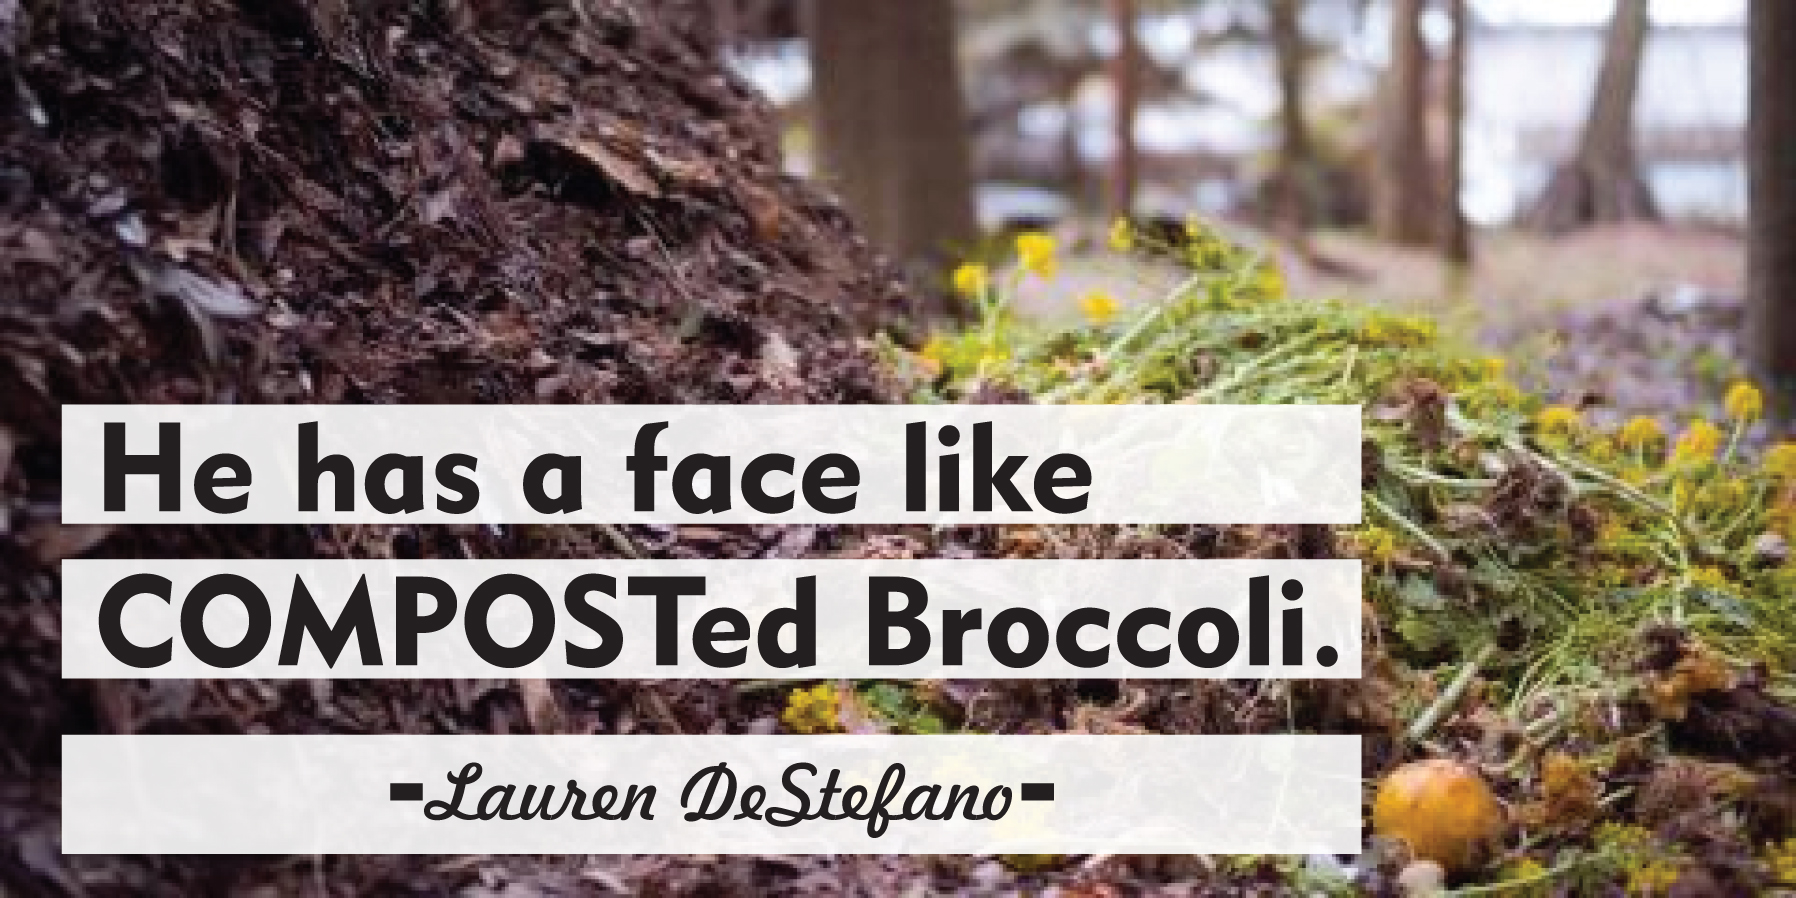 compost face like broccoli.jpg